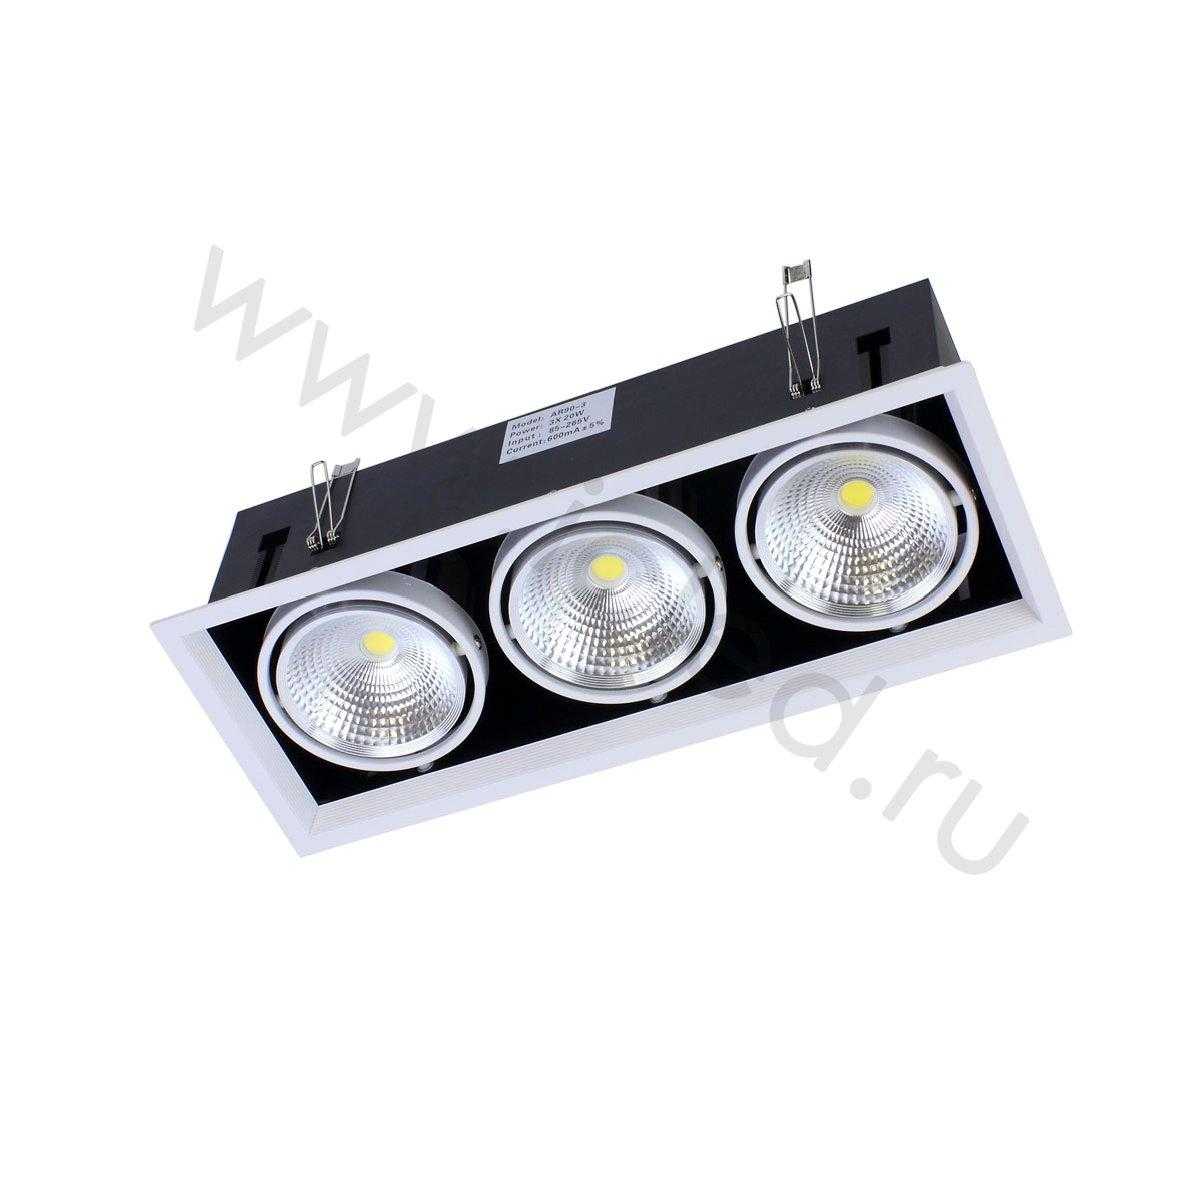 Светодиодные светильники Светодиодный светильник карданный AR90-3 OD3 (220V, 3х20W, white)